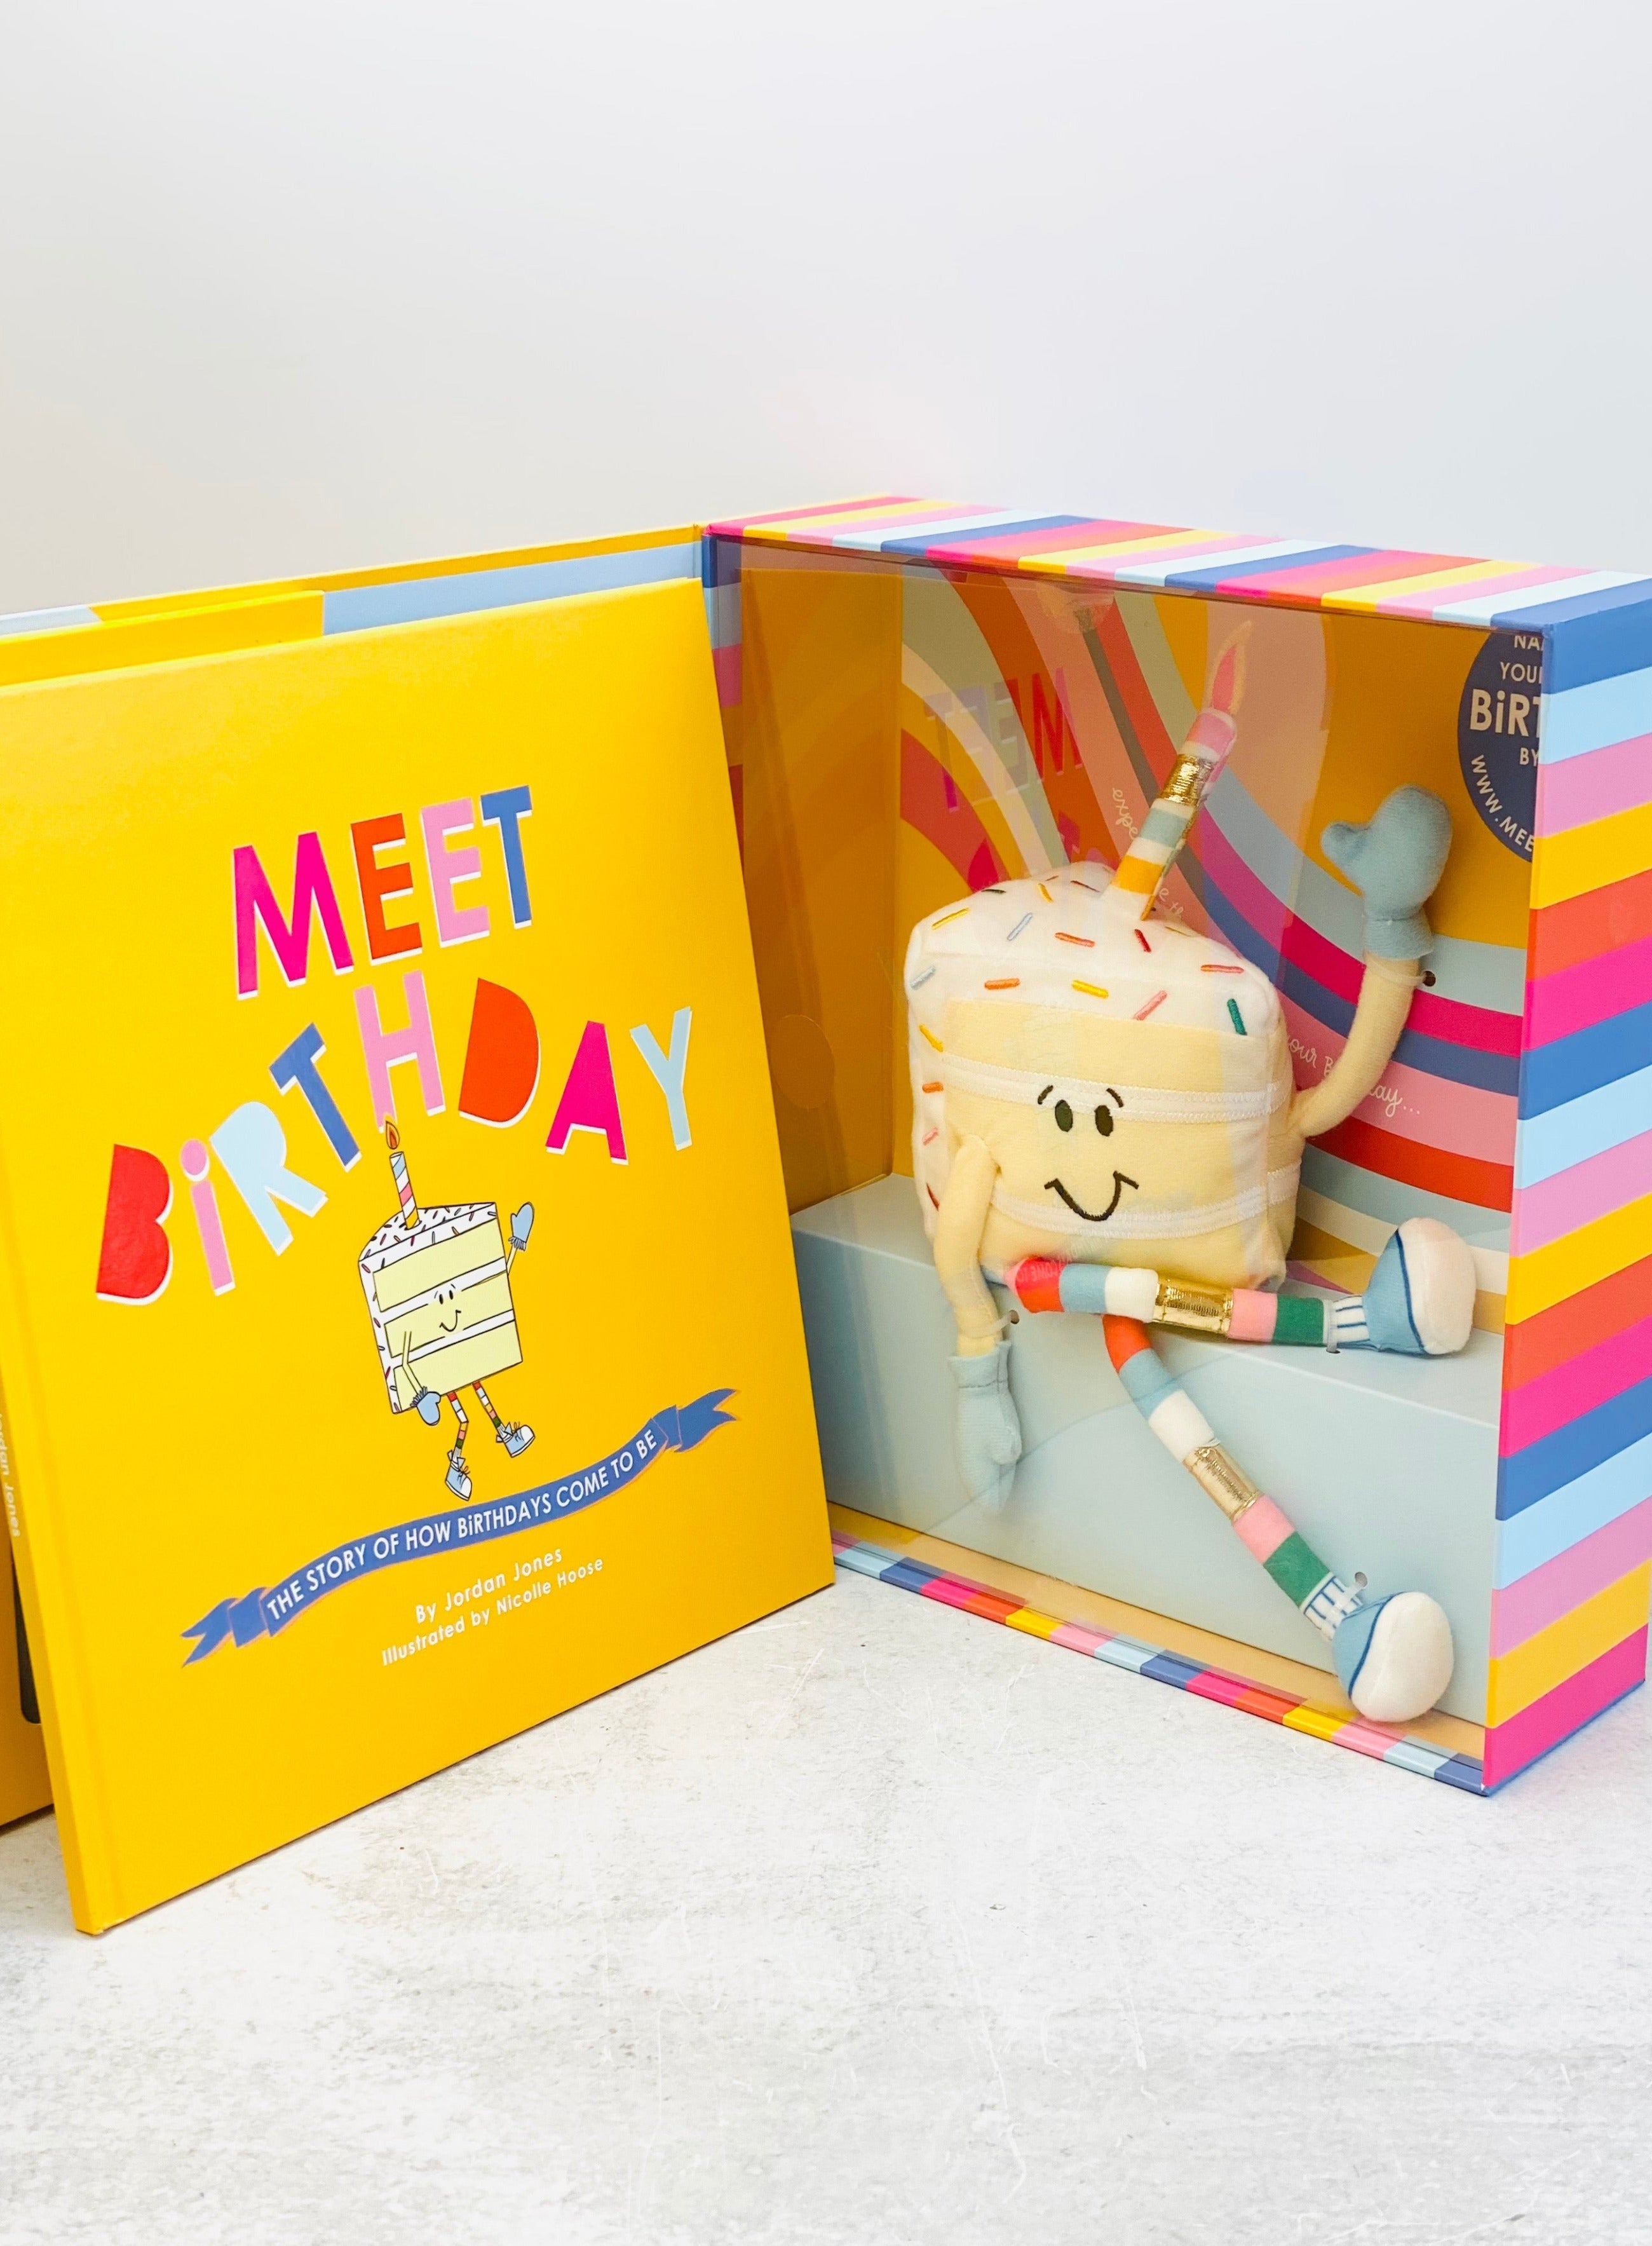 'Meet Birthday' Book & Plush